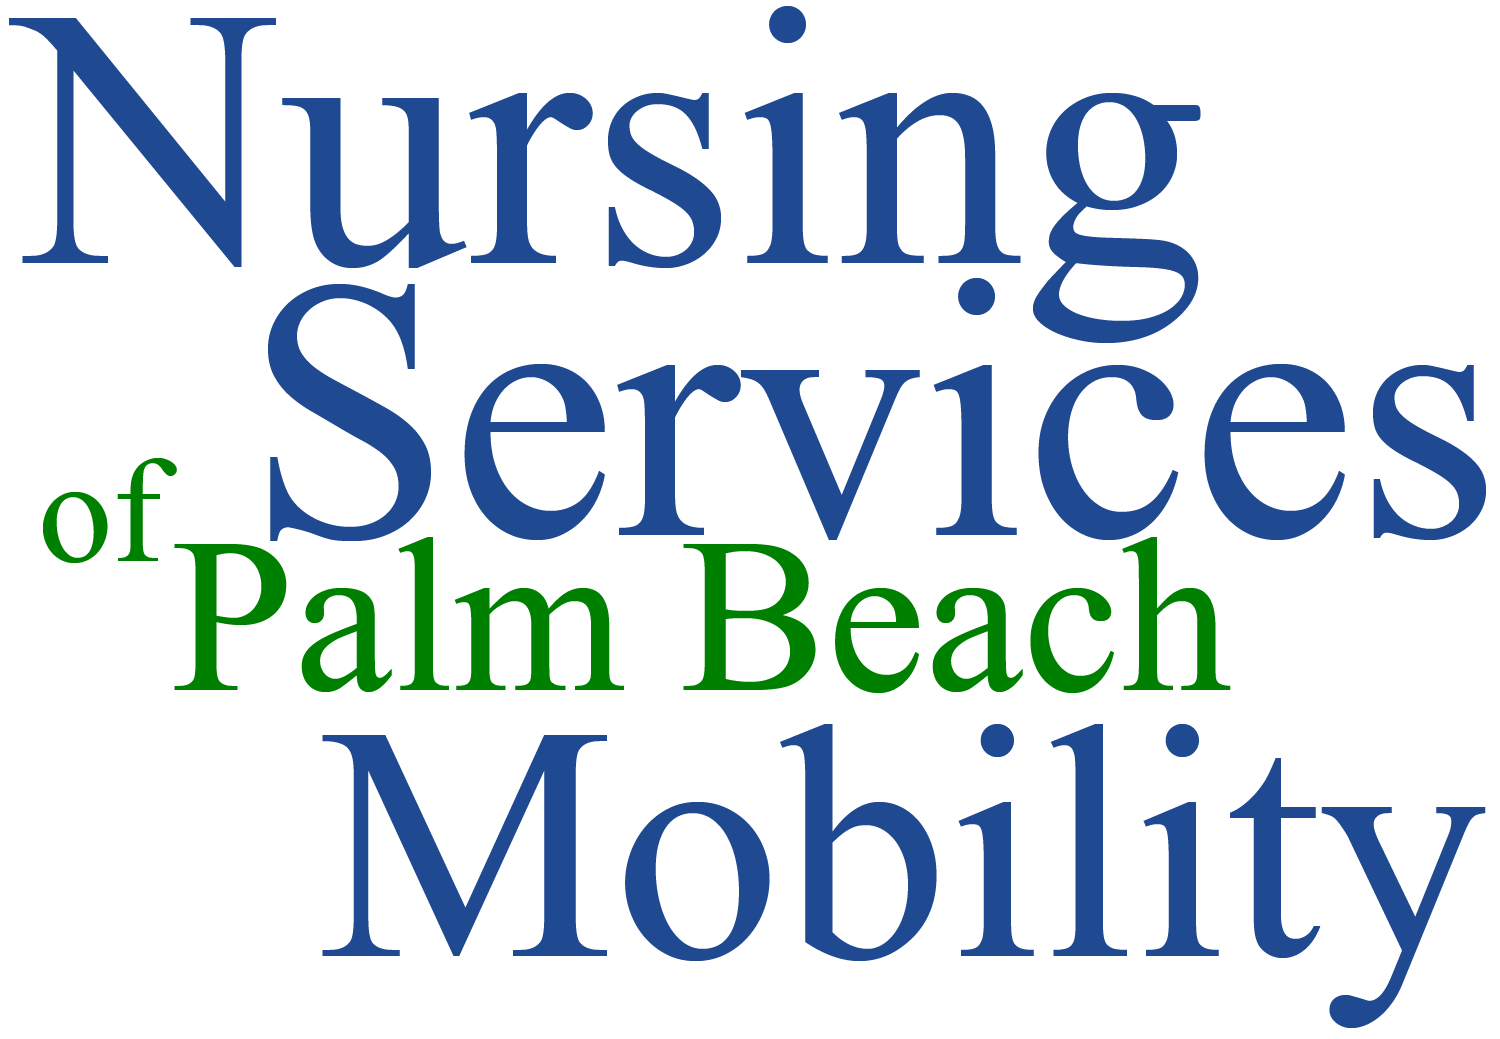 Nursing Services of Palm Beach Mobility